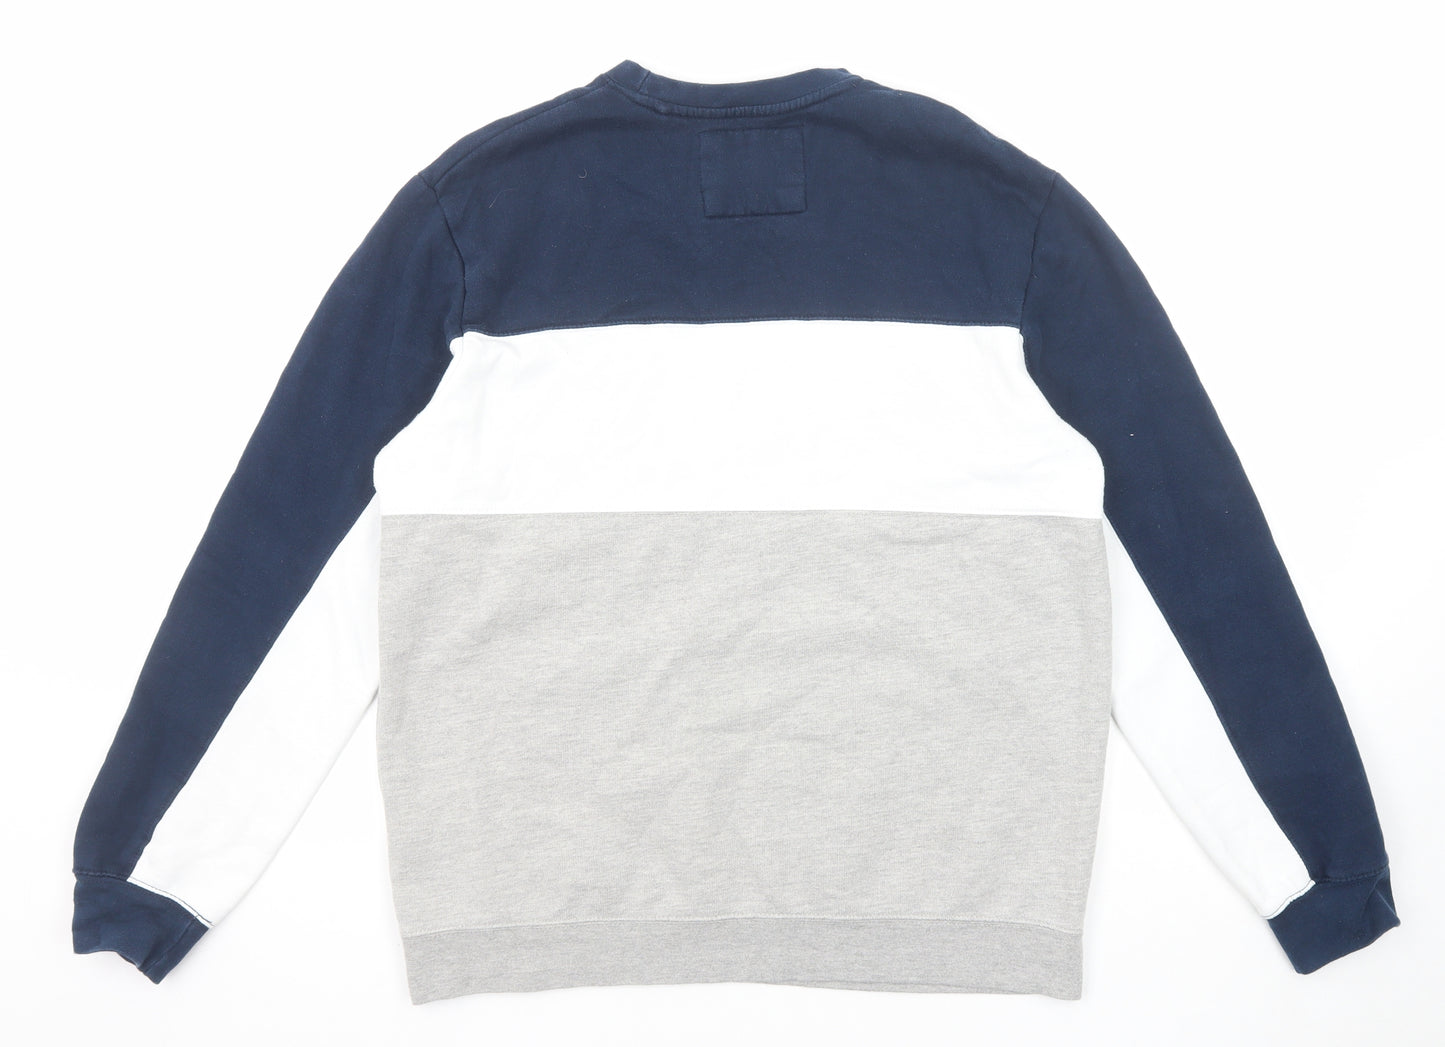 Pull&Bear Mens Multicoloured Cotton Pullover Sweatshirt Size L - Colourblock